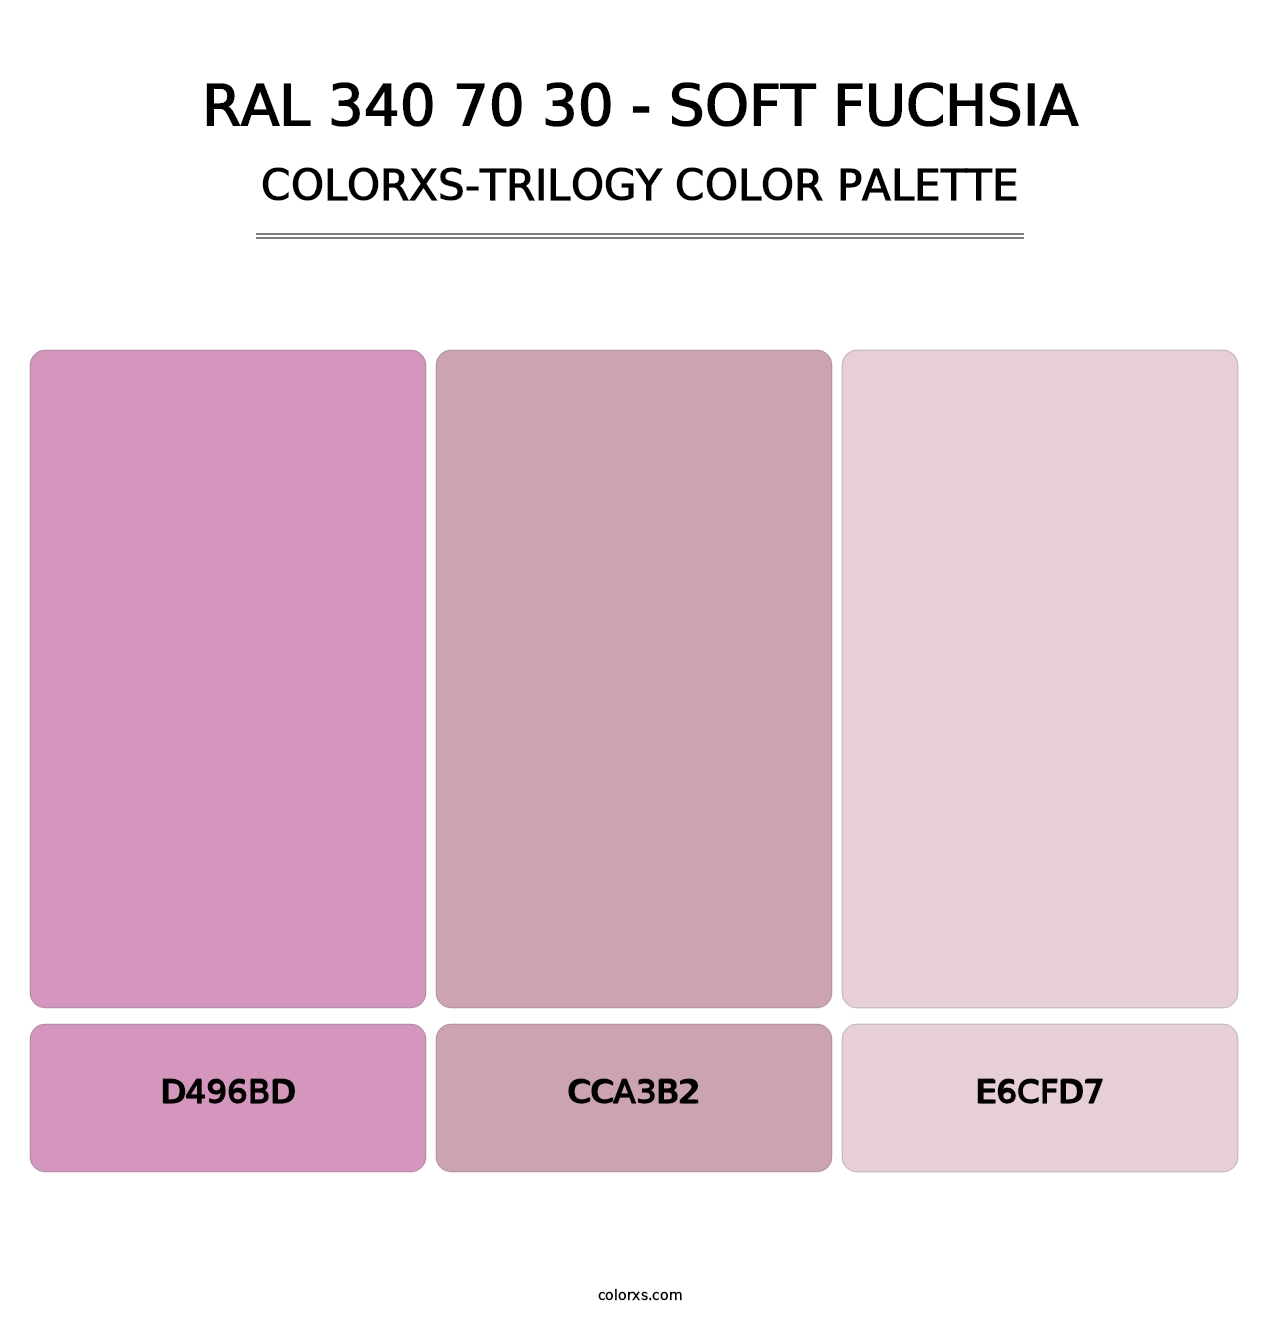 RAL 340 70 30 - Soft Fuchsia - Colorxs Trilogy Palette